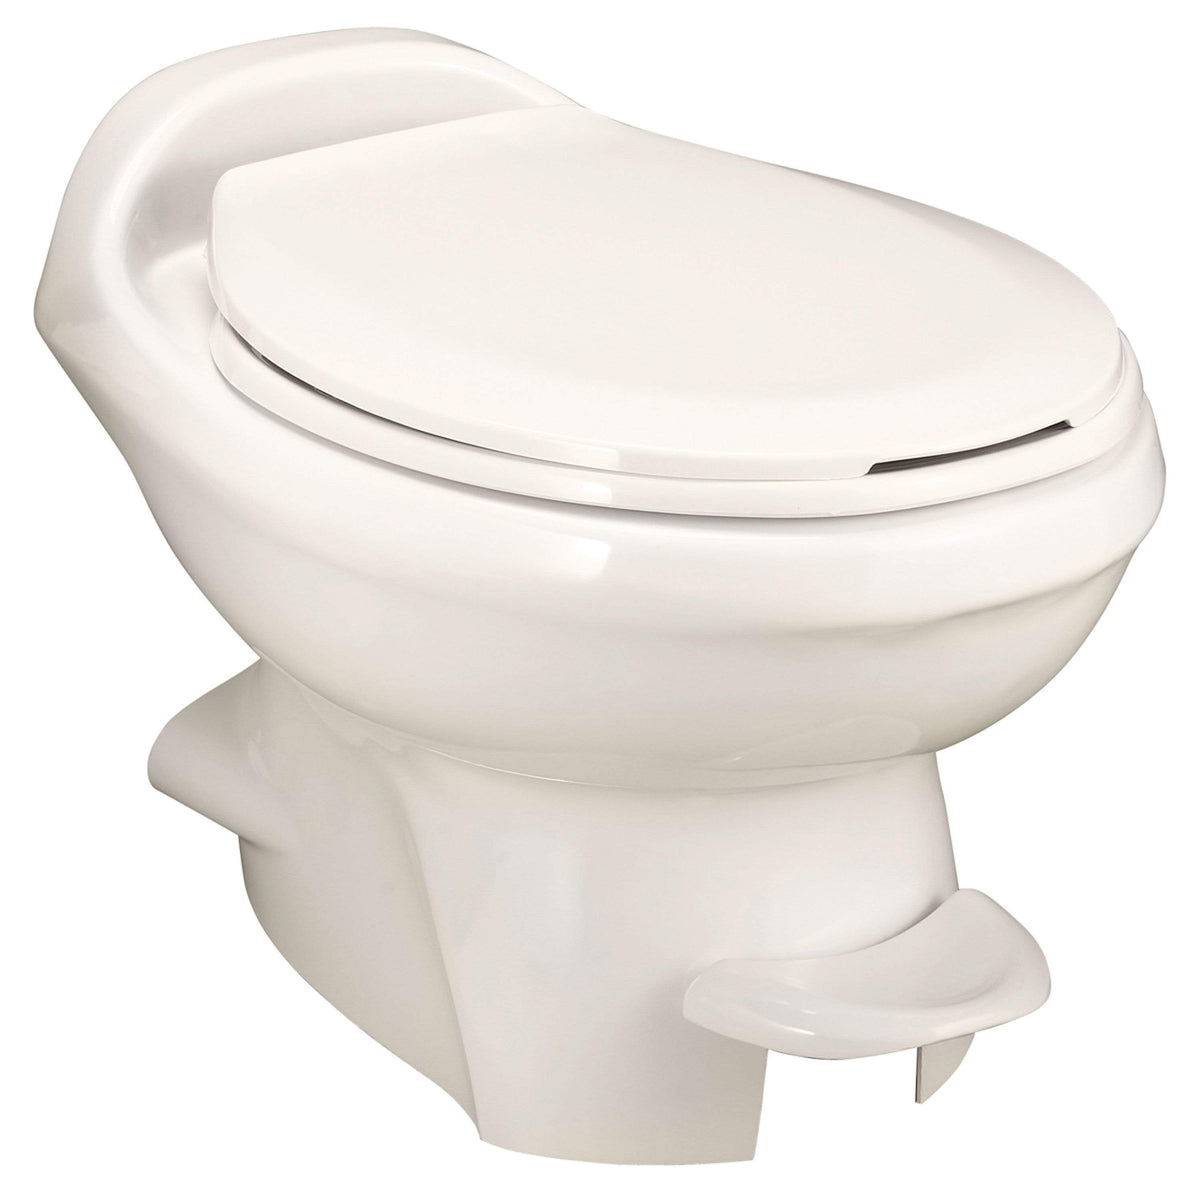 Thetford Not Qualified for Free Shipping Thetford Aqua-Magic Style Plus Toilet Low Bone #34438